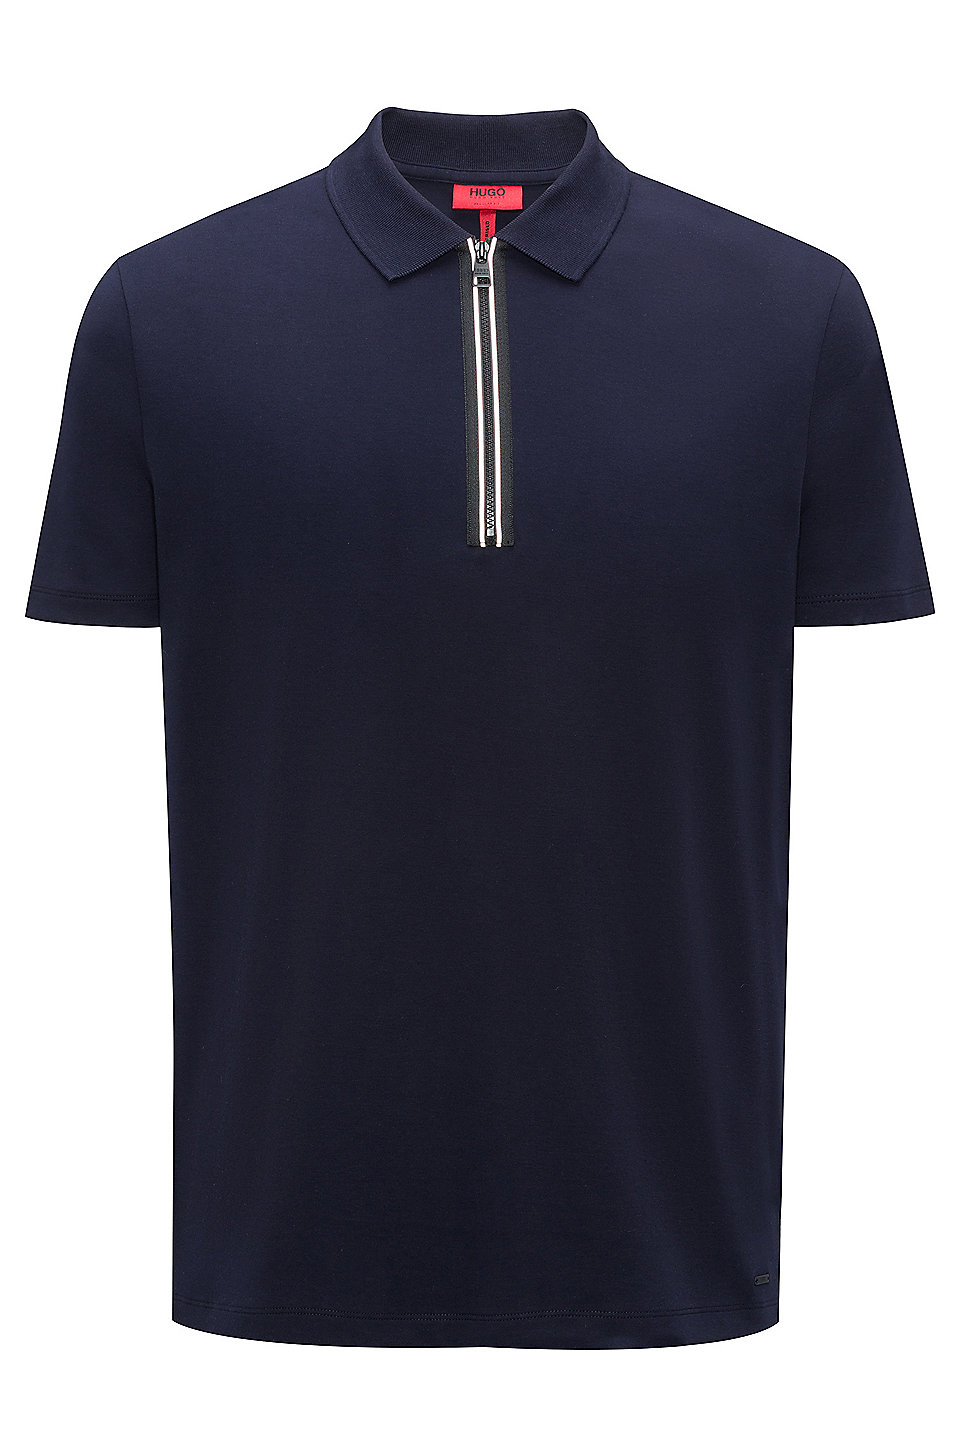 HUGO - Polo shirt in interlock cotton with contrast zipper detail